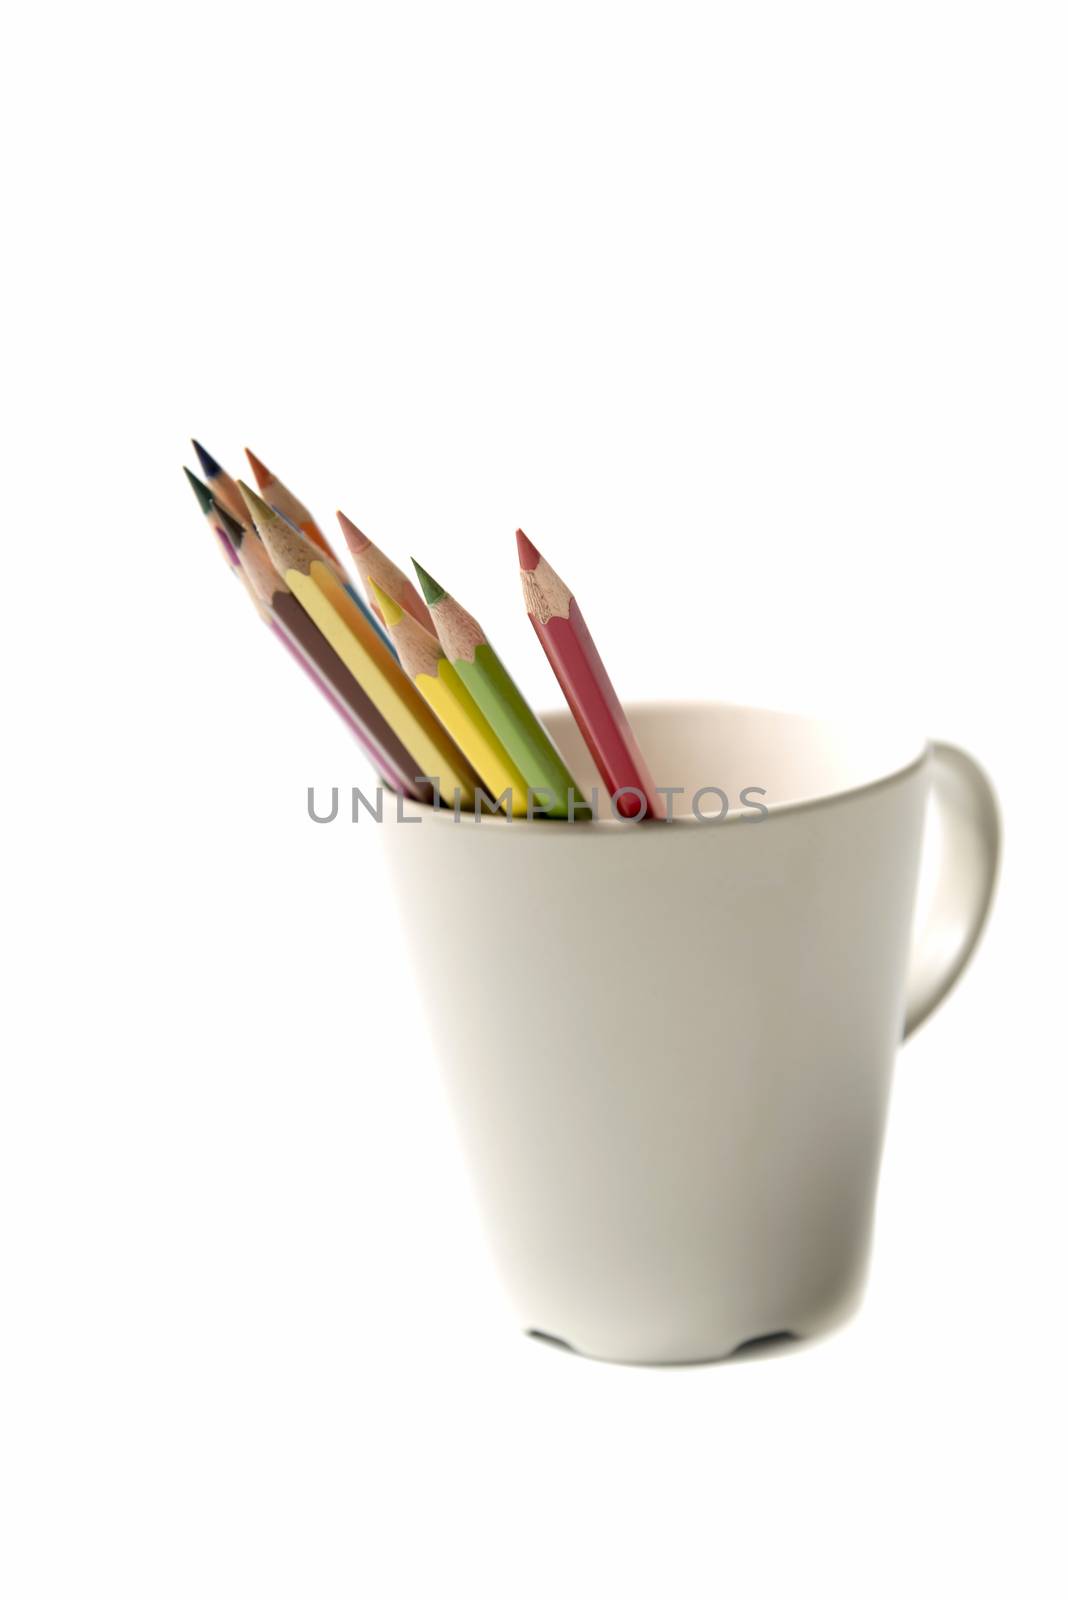 colorful pencil in mug by ammza12